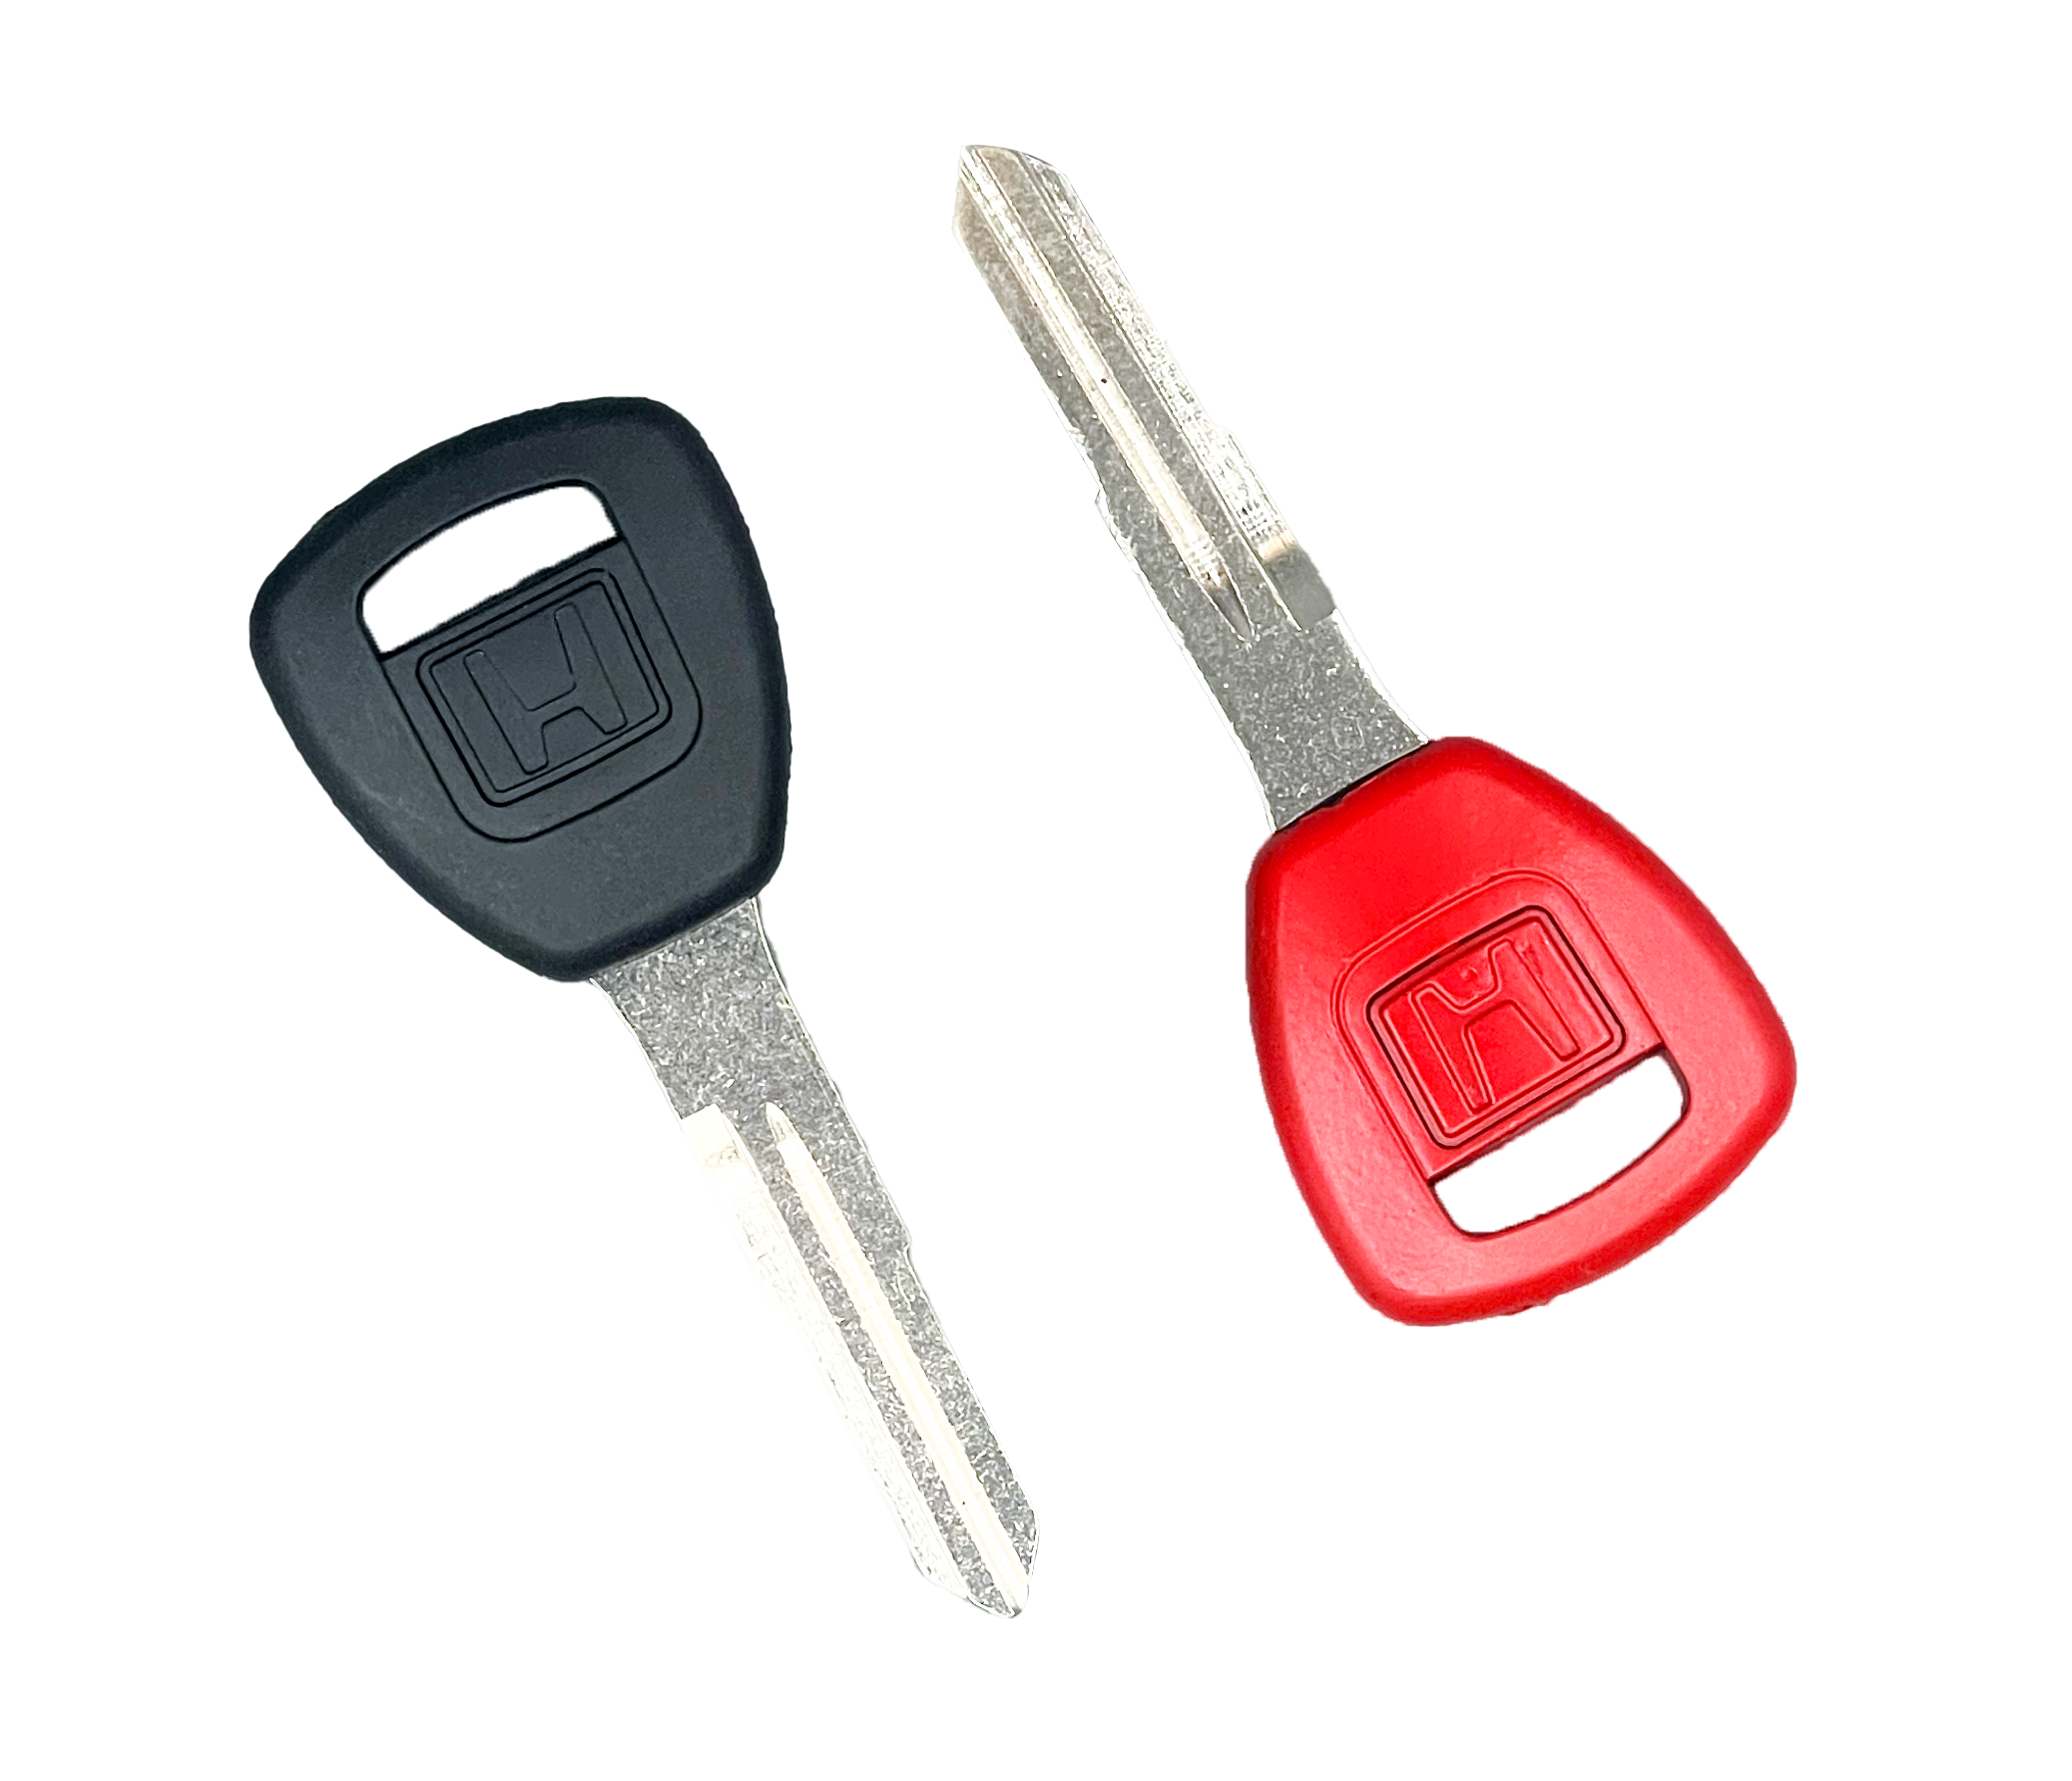 EZ Flasher Honda Replacement Keys- Locksmith- AE Tools & Computers